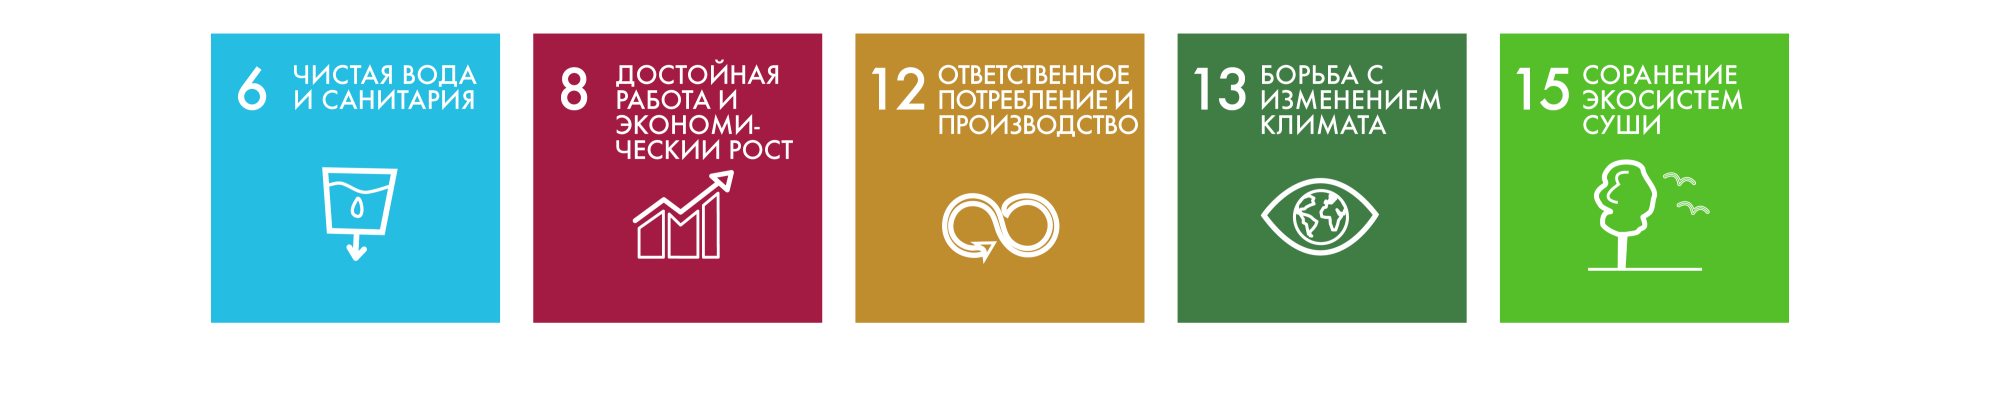 Sustainable Development Goals RU